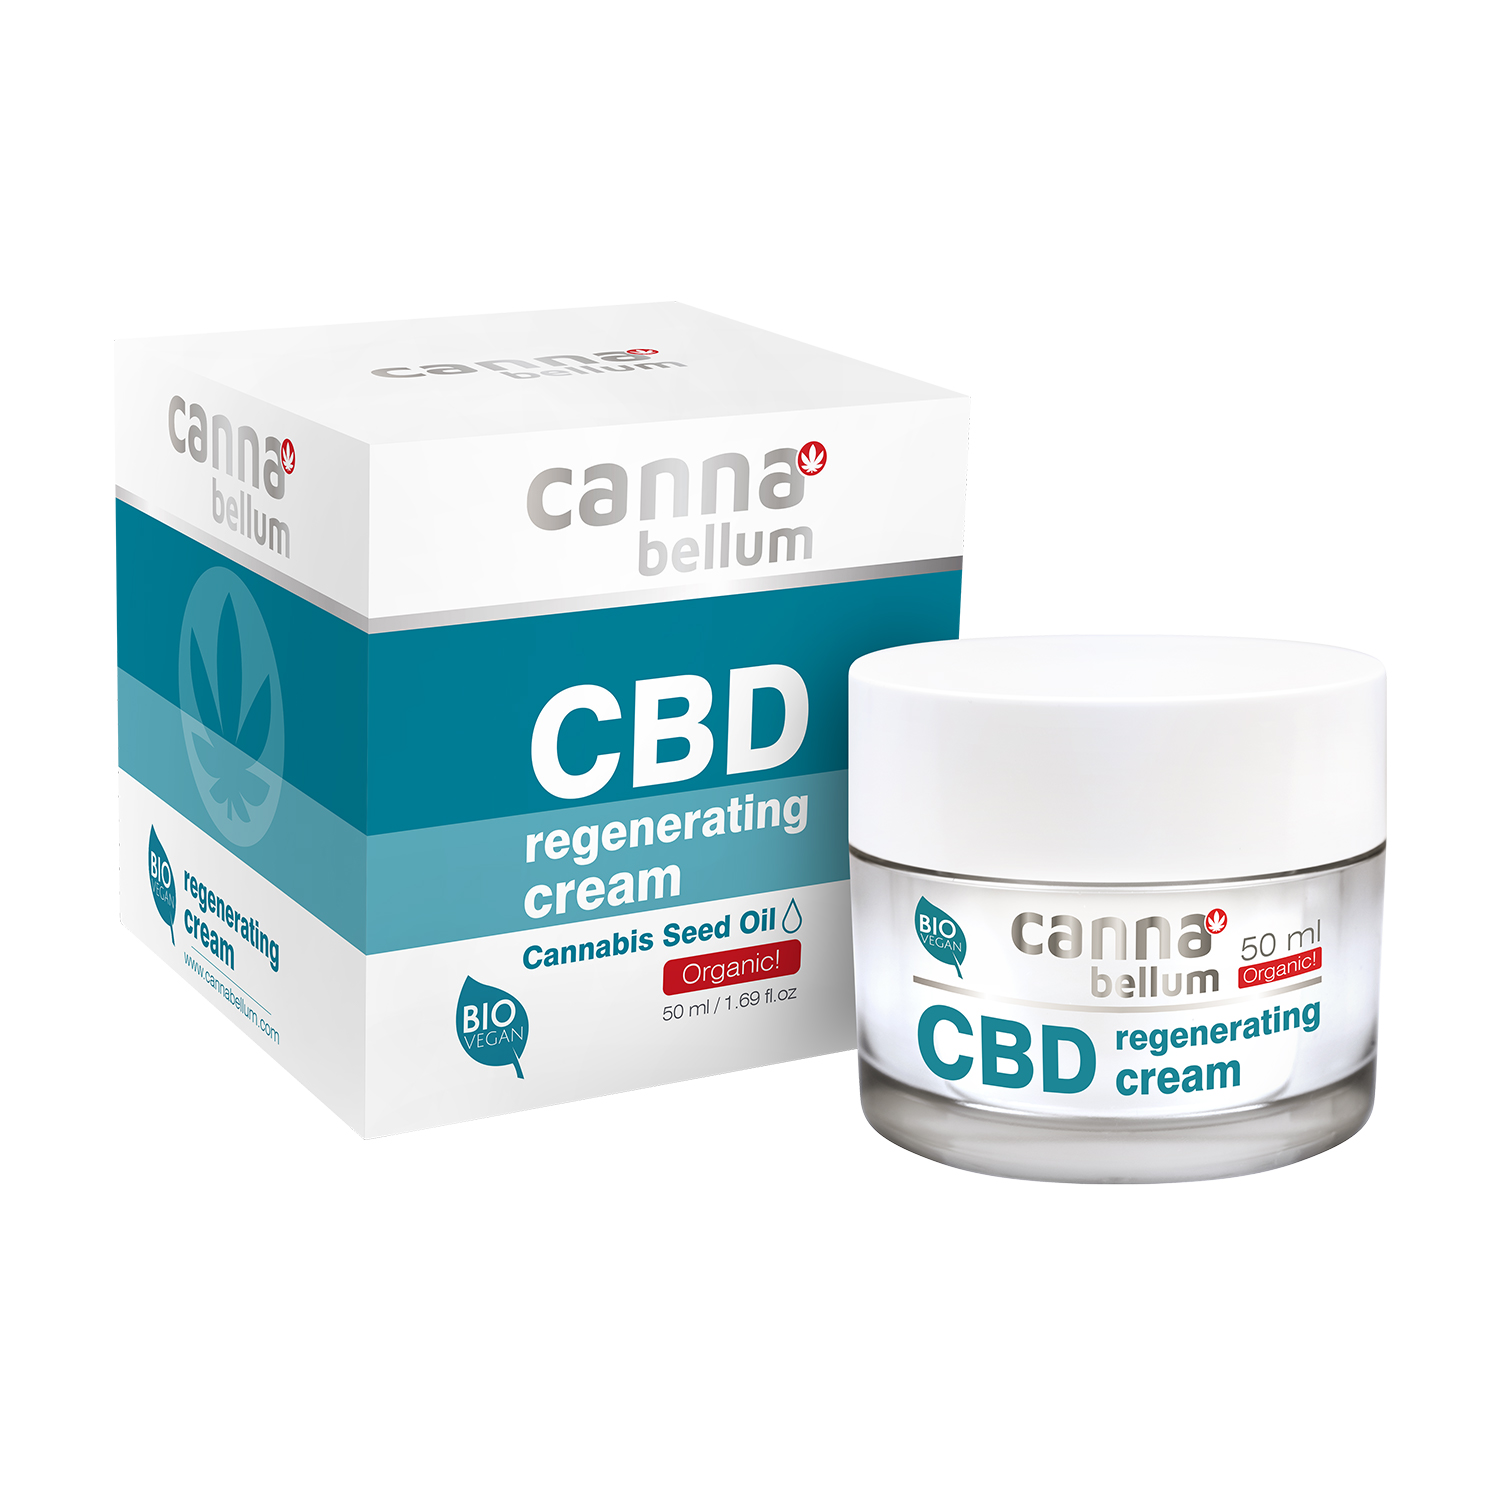 Cannabellum CBD regenerating cream 50ml P1253 komplet WEB 31